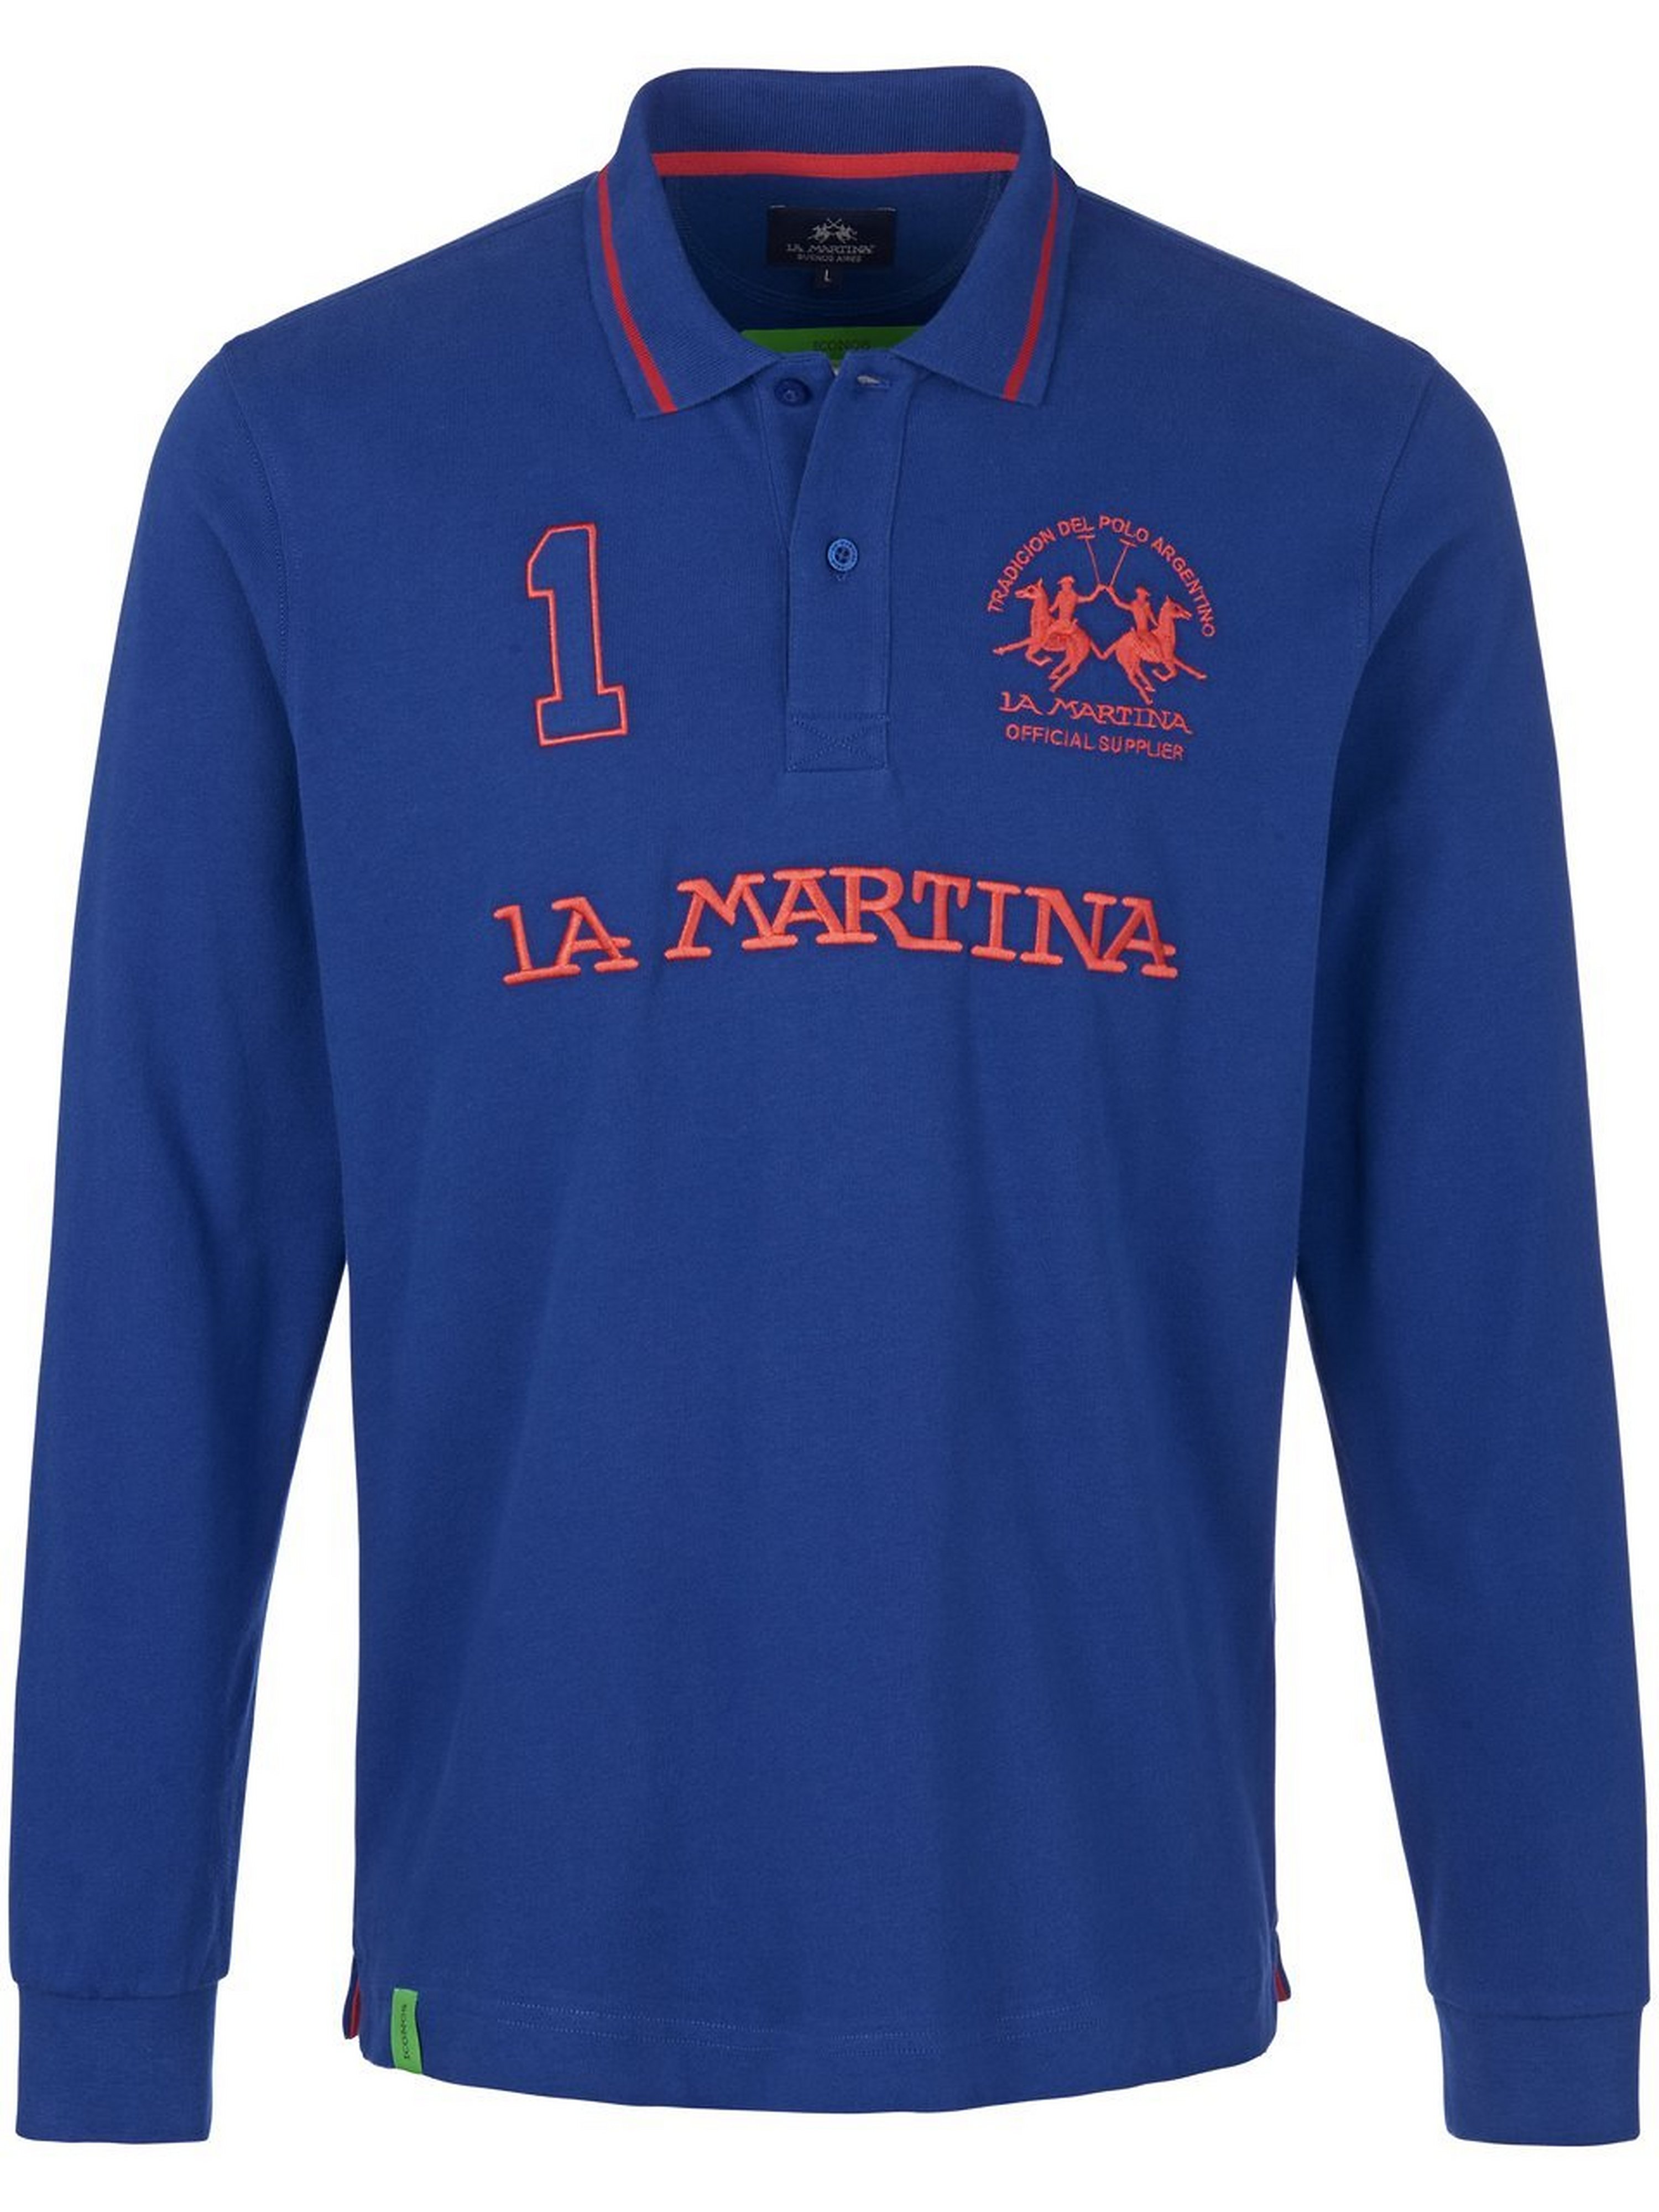 Poloshirt Van La Martina blauw